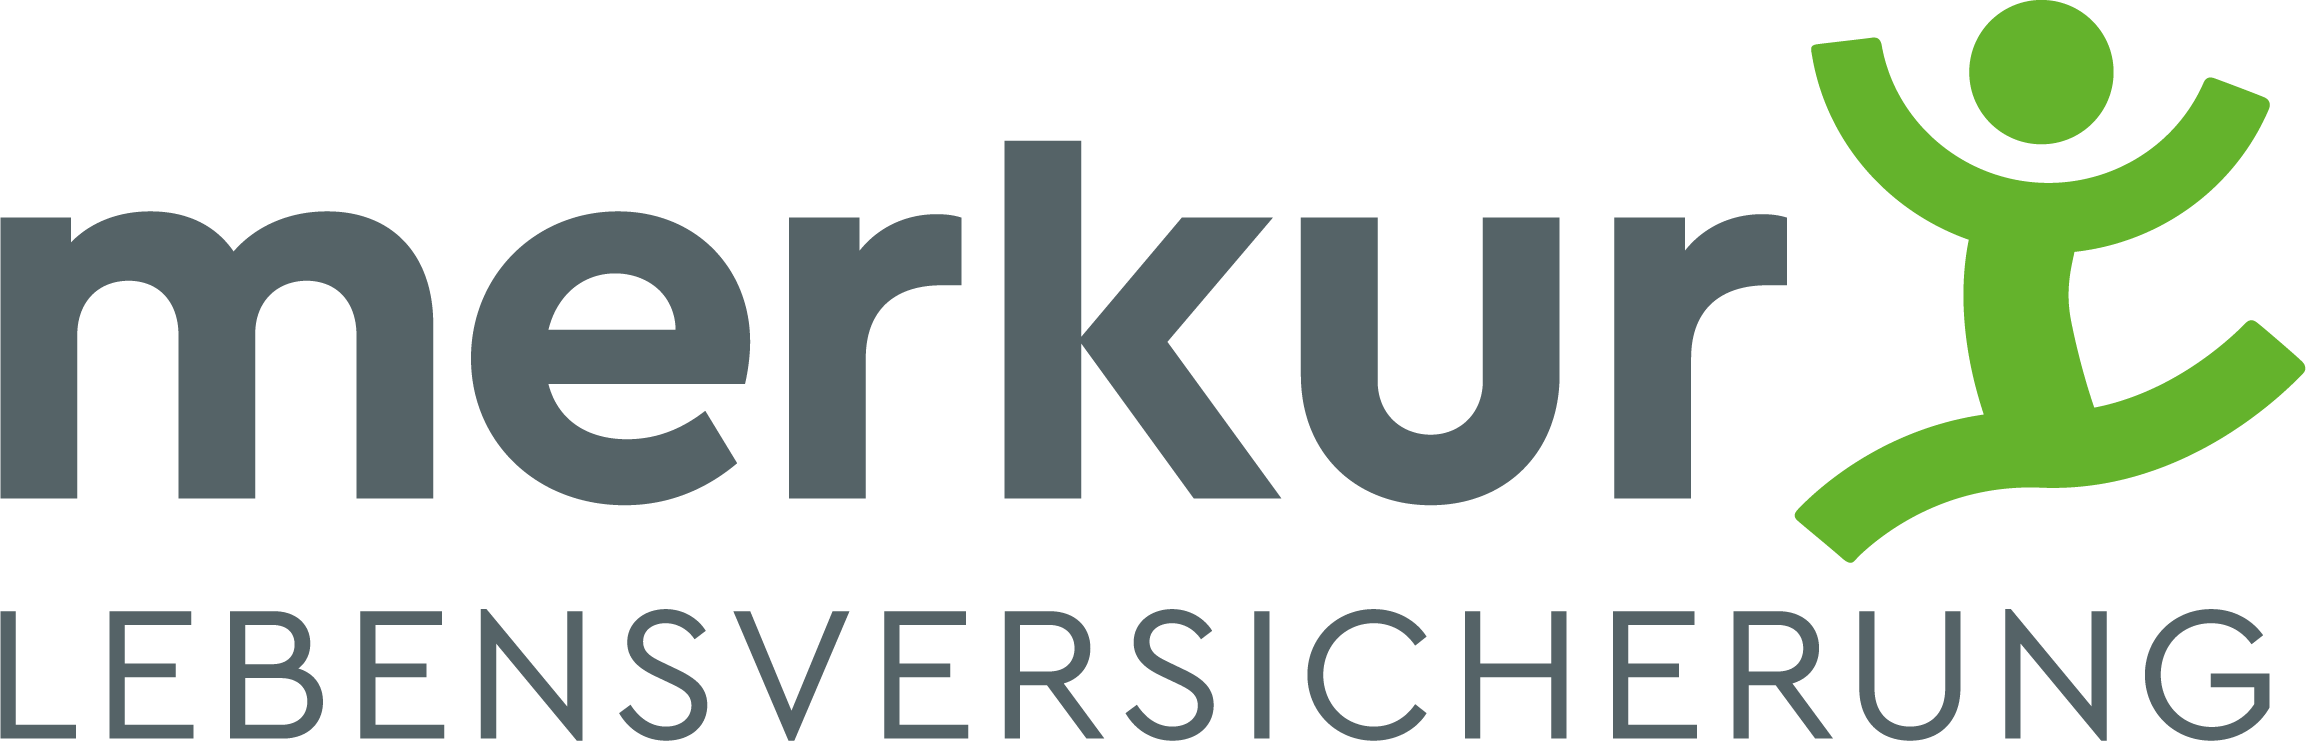 Merkur Lebensversicherung AG Teaser Logo